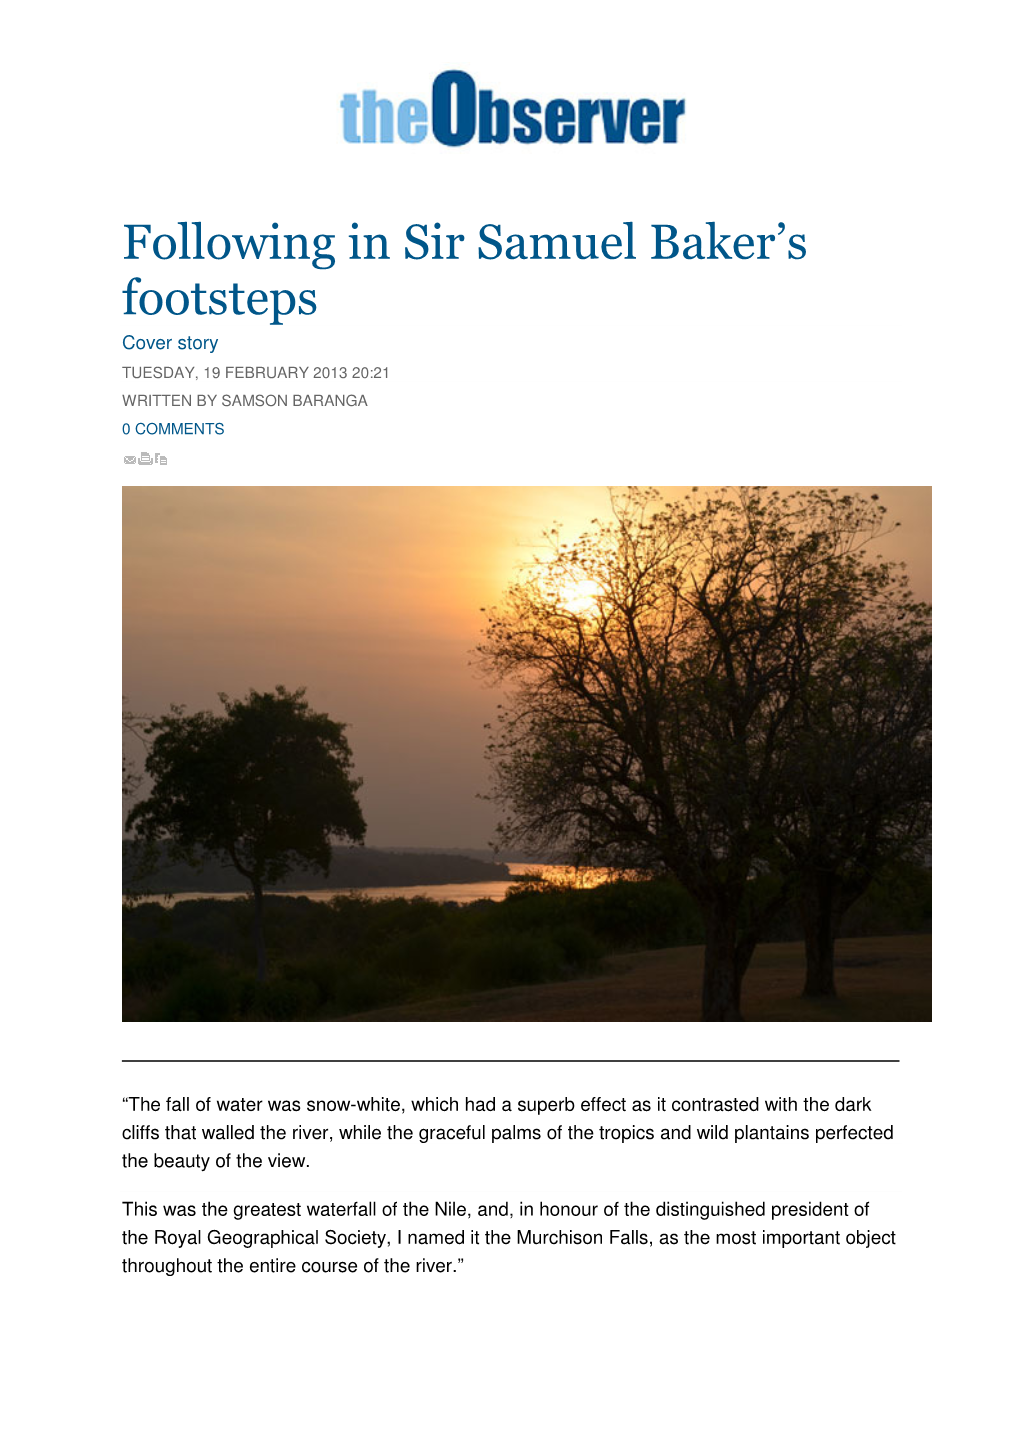 Following in Sir Samuel Baker's Footsteps by Samson Baranga